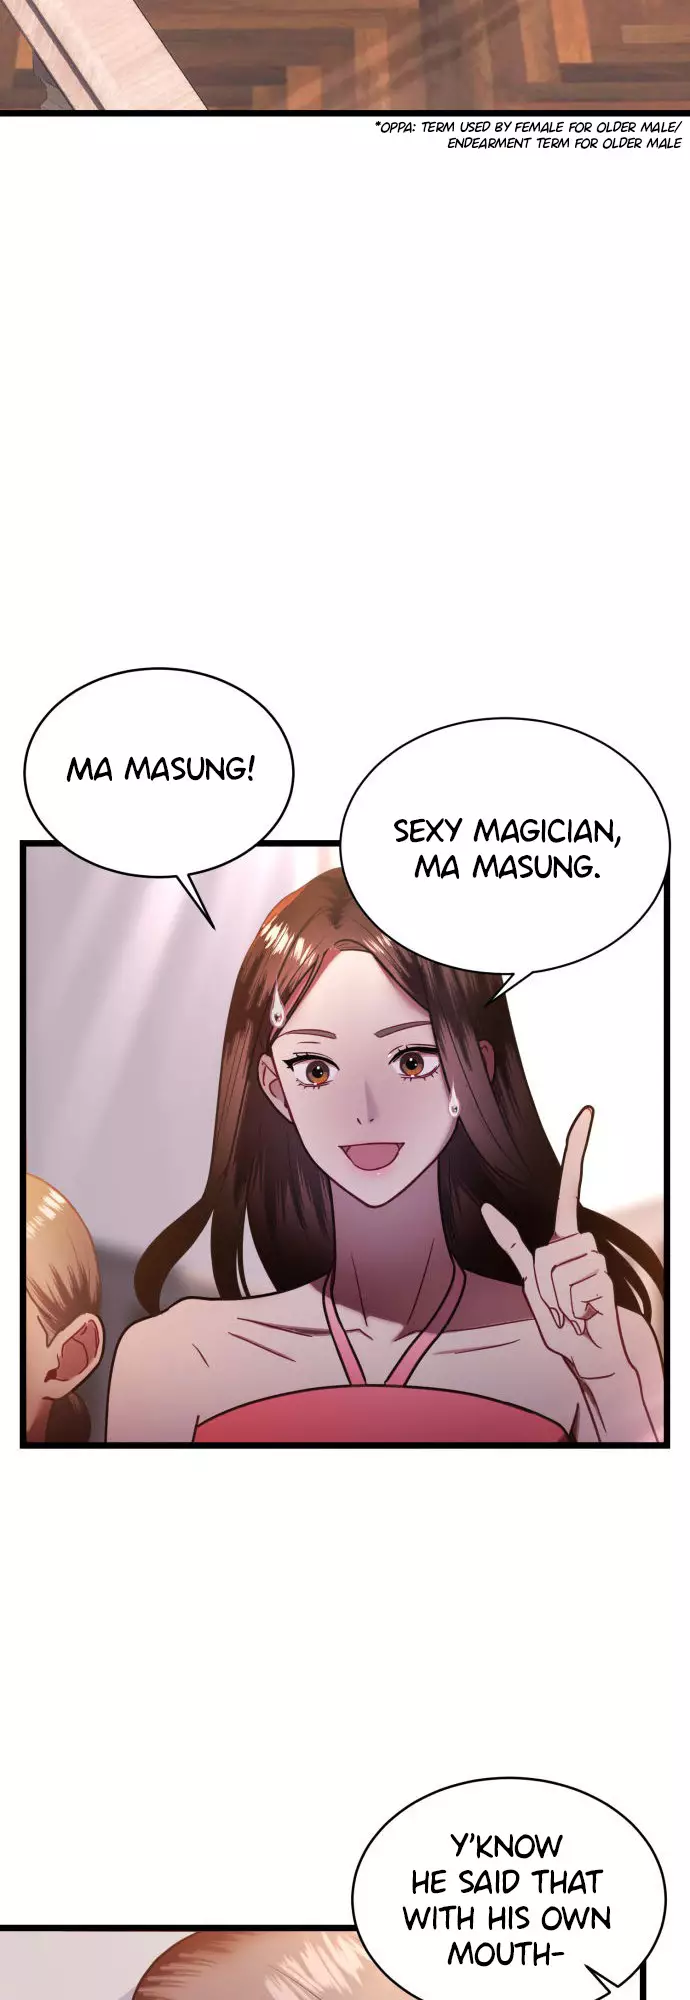 Maseknam - A Sexy Magician - 9 page 16-9b70f4f7